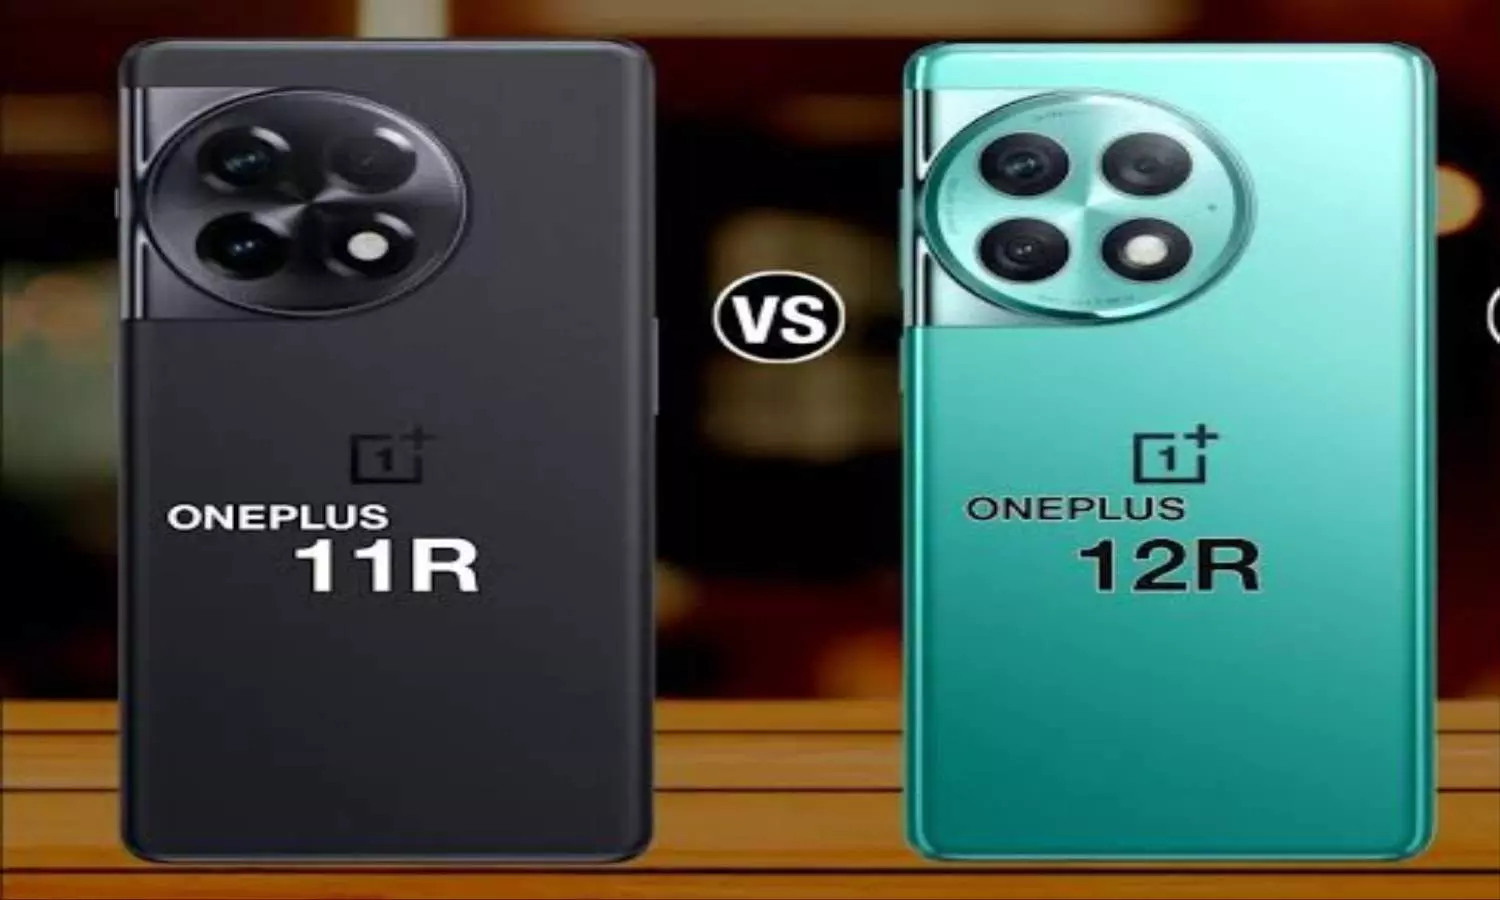 OnePlus 12R vs Oneplus 11R